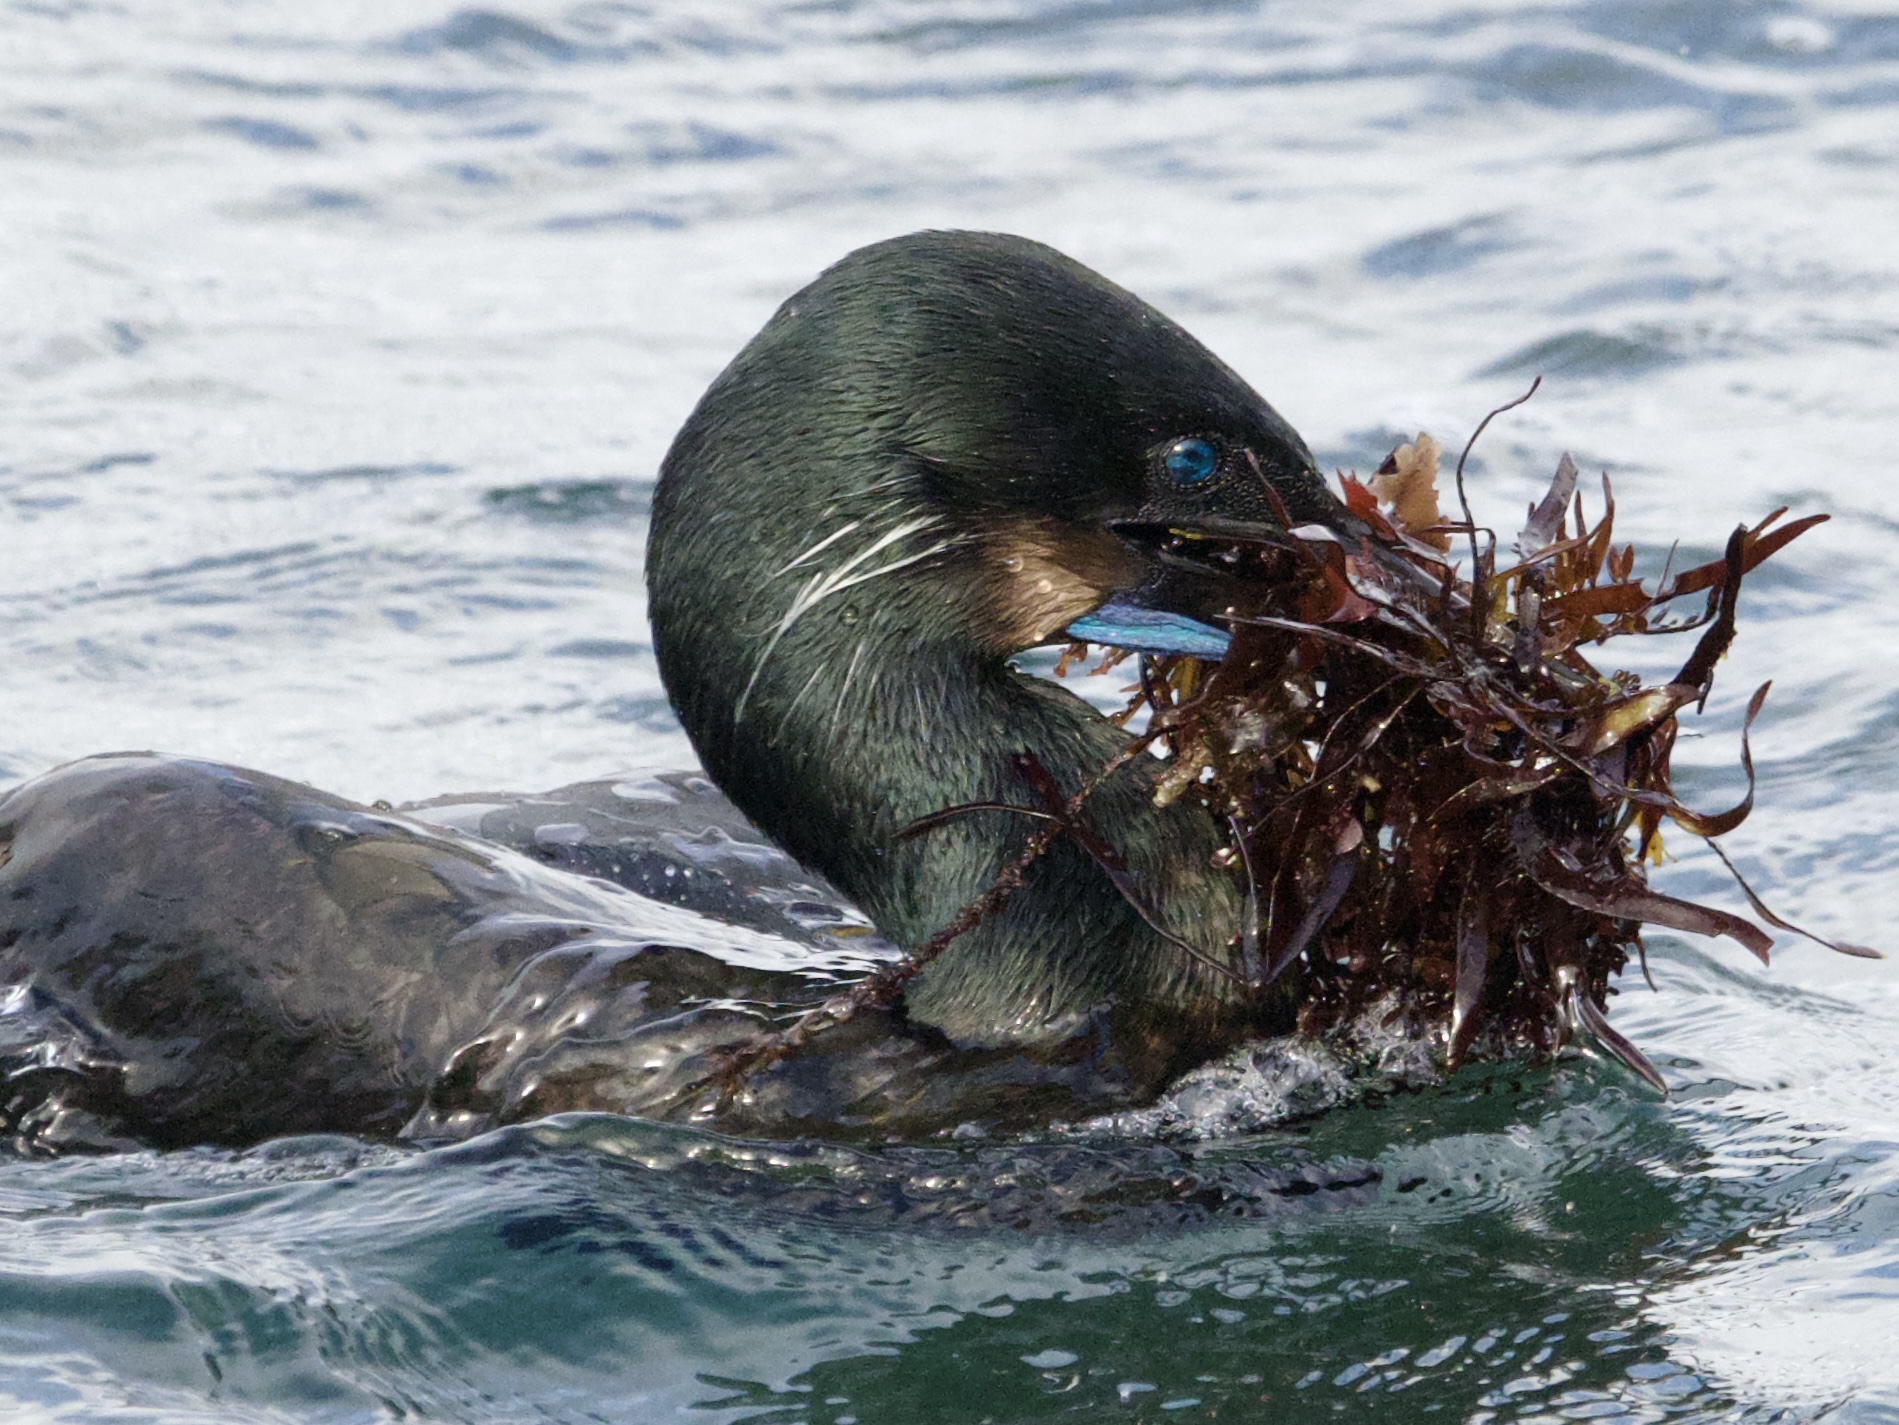 Brandt's Cormorant with Bill Full of Seaweed